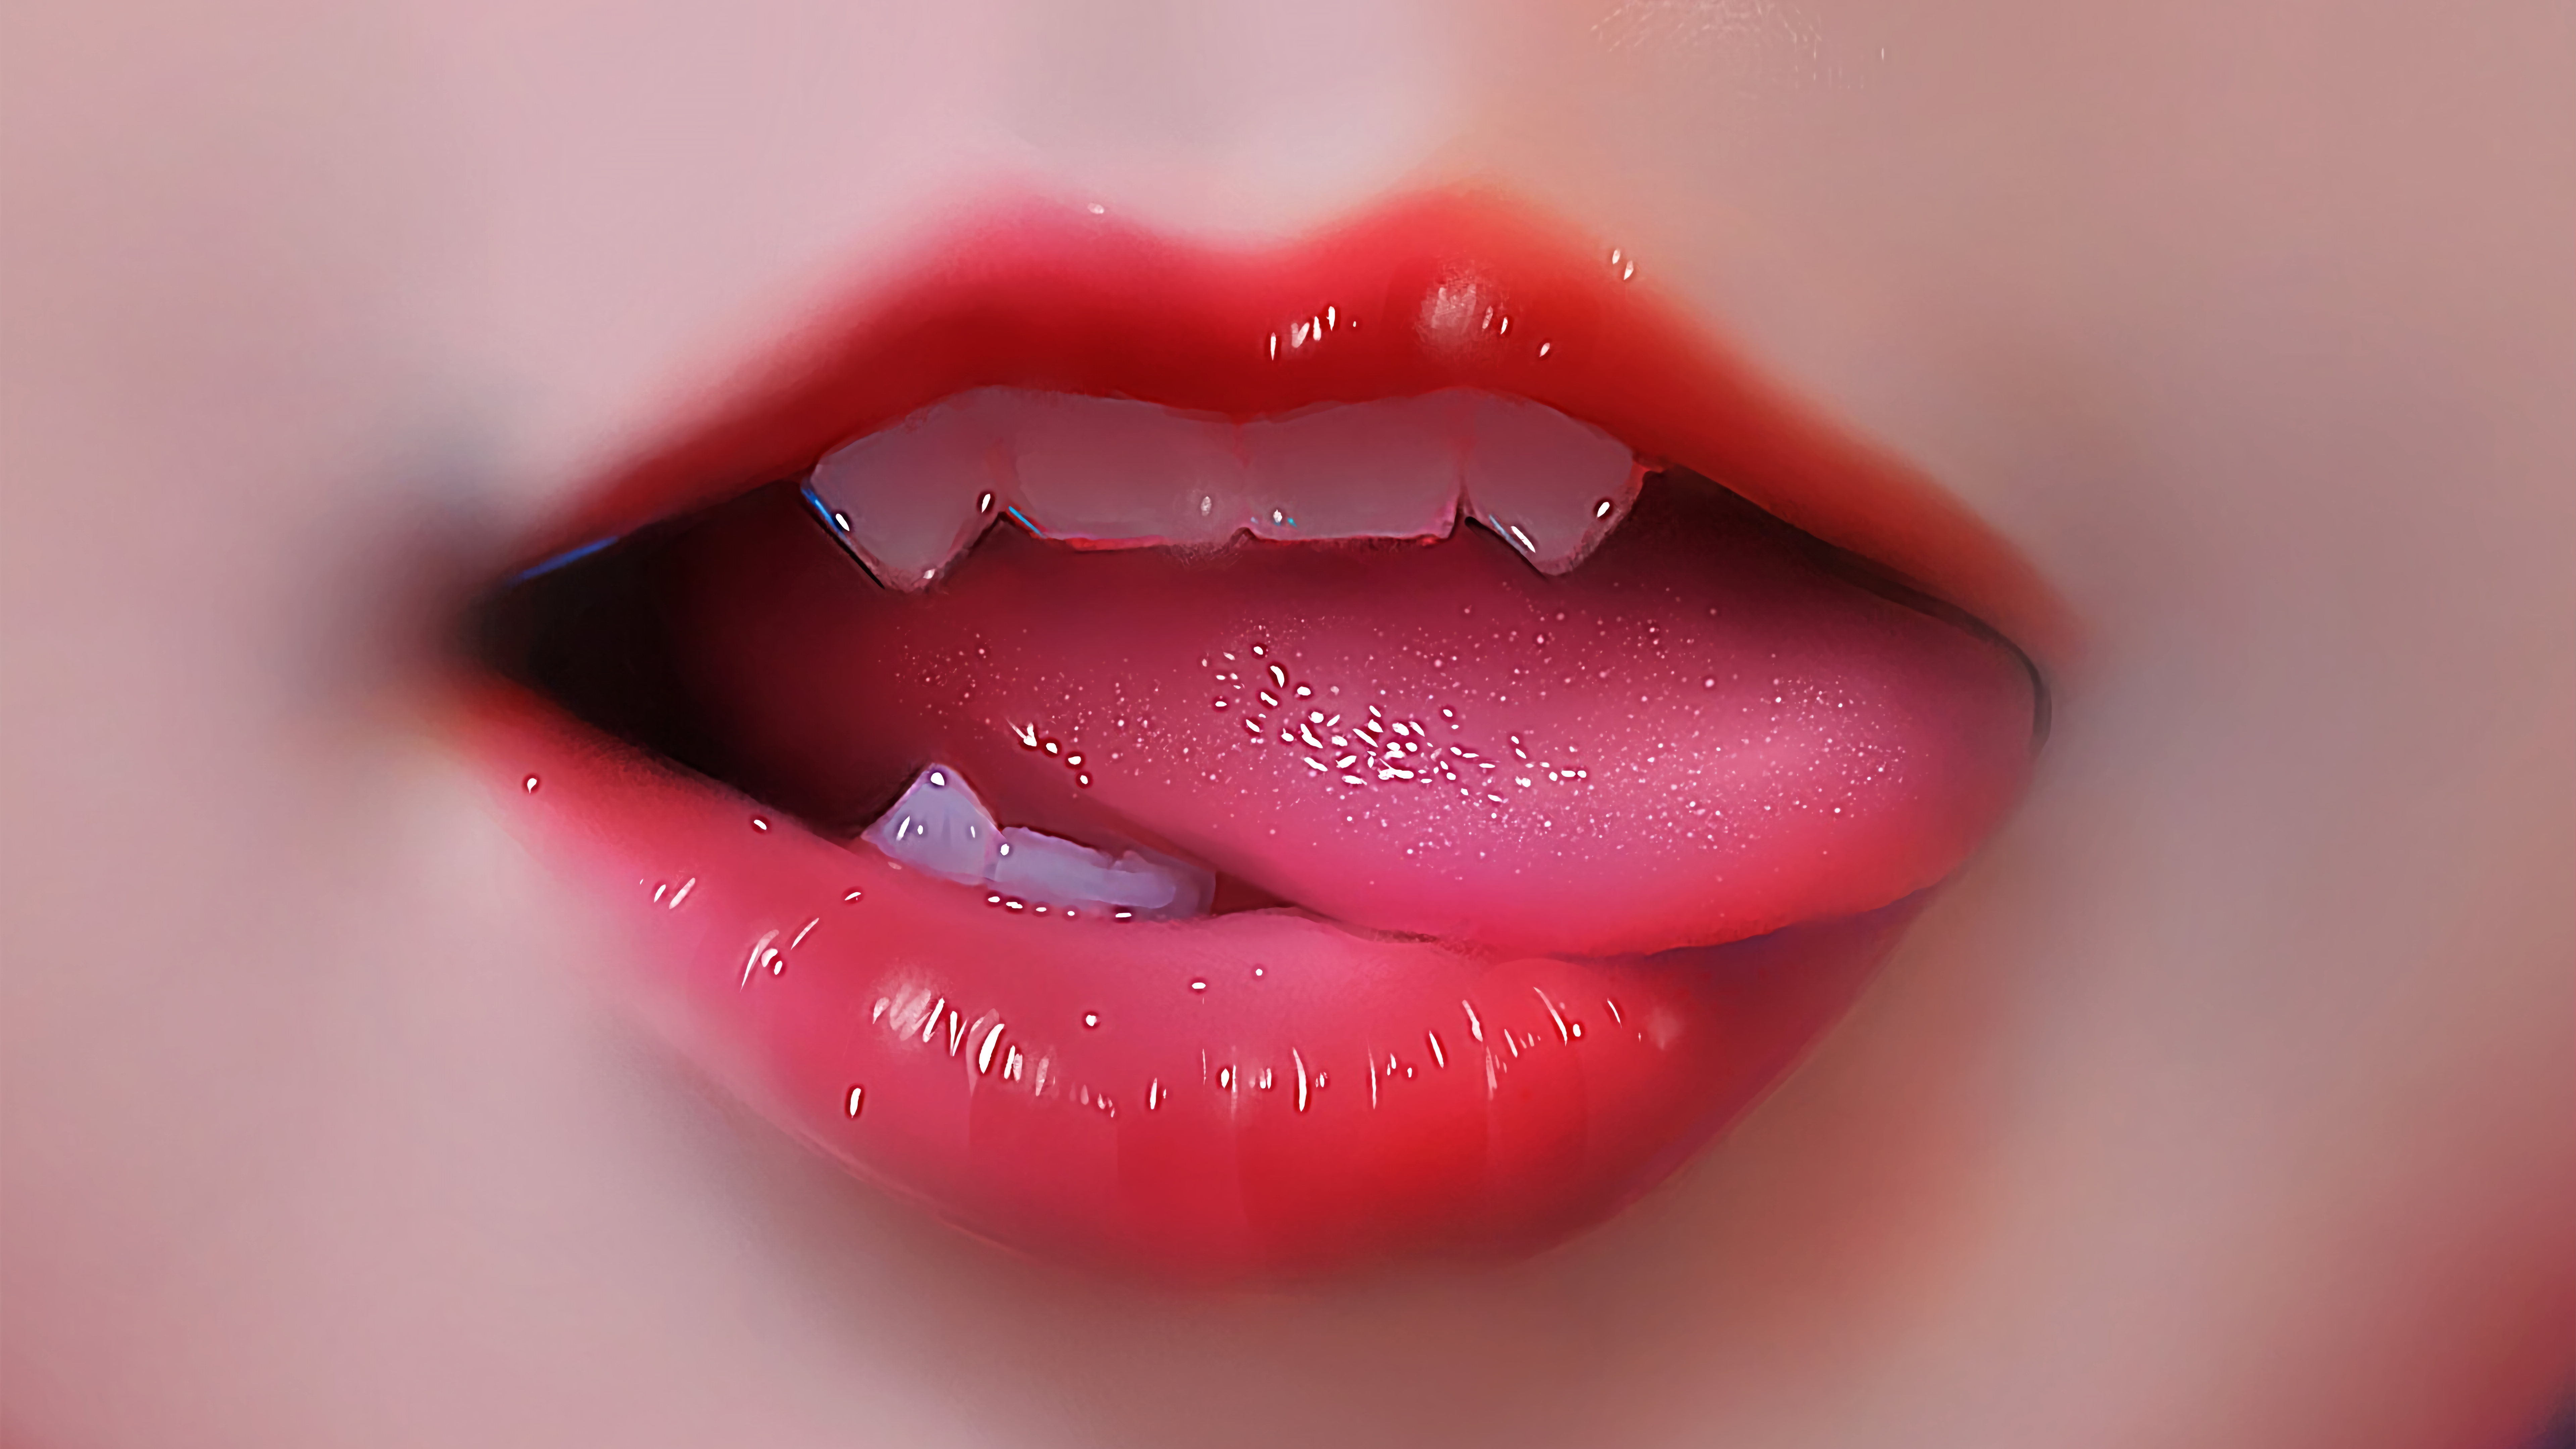 General 7676x4317 mouth licking lips red lipstick women tongues digital art teeth vampire girl